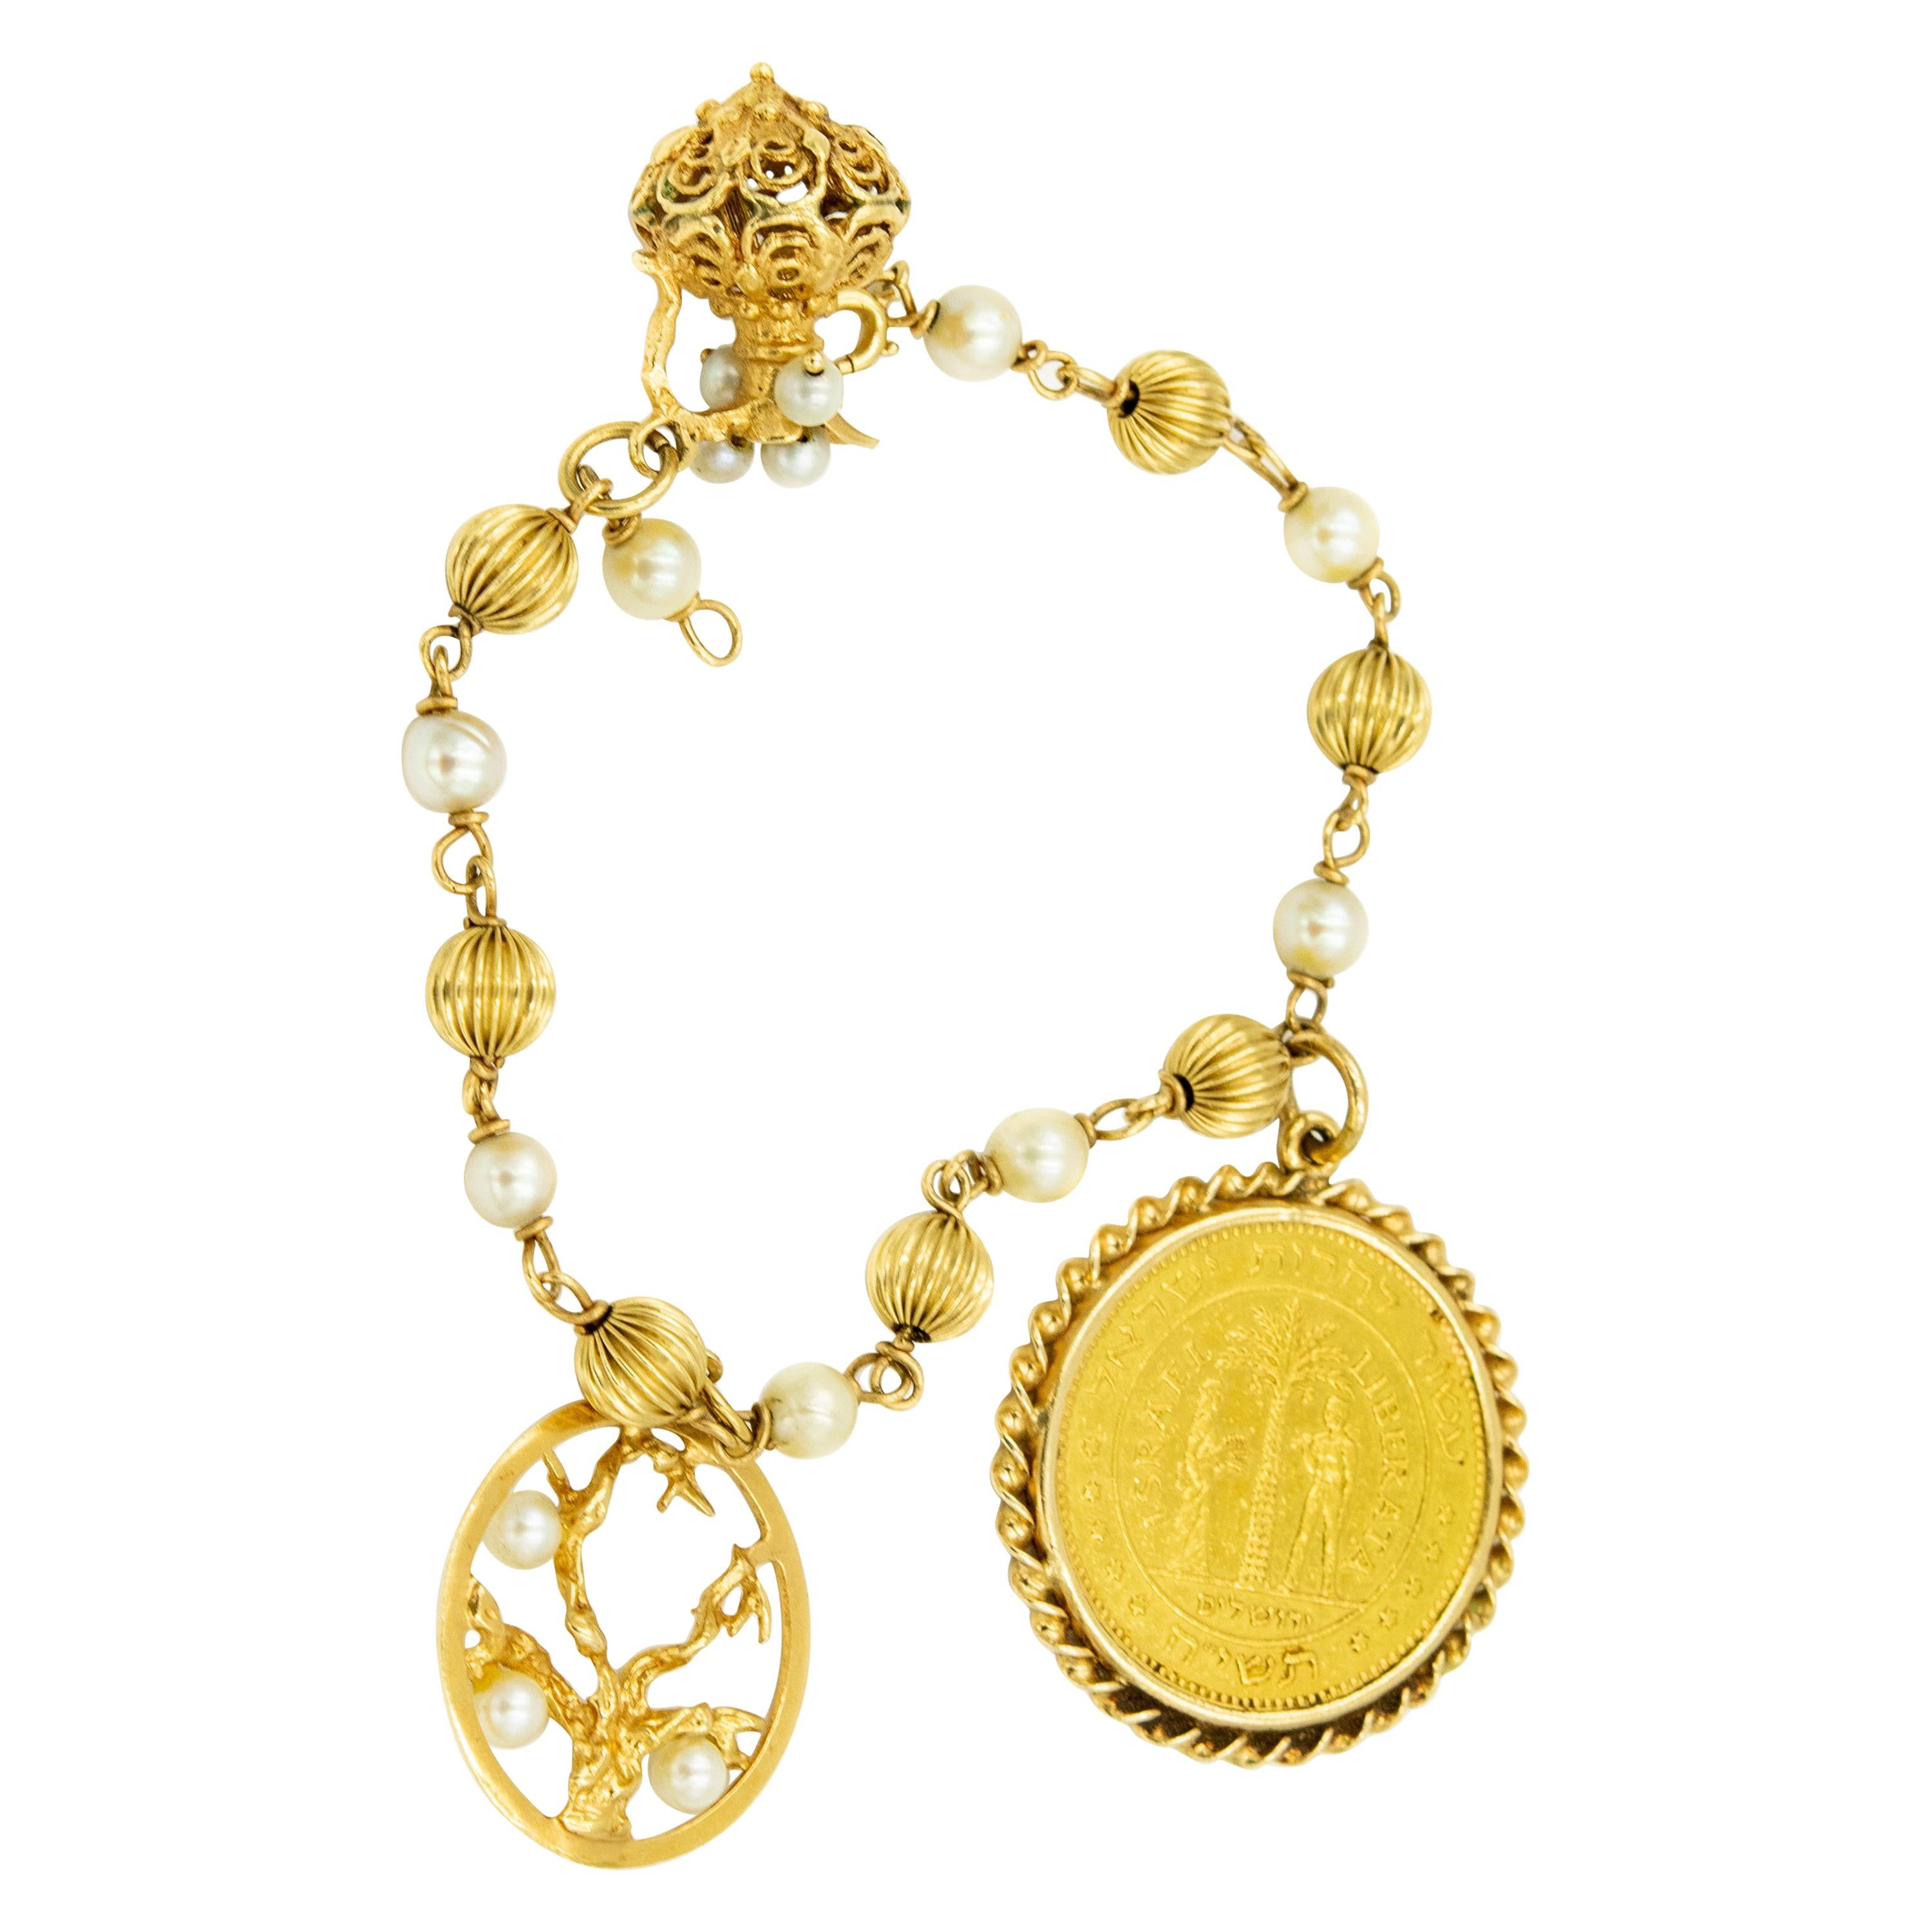 Cultured Pearl 14 Karat Yellow Gold Charm Bracelet with Israel Liberata Medal